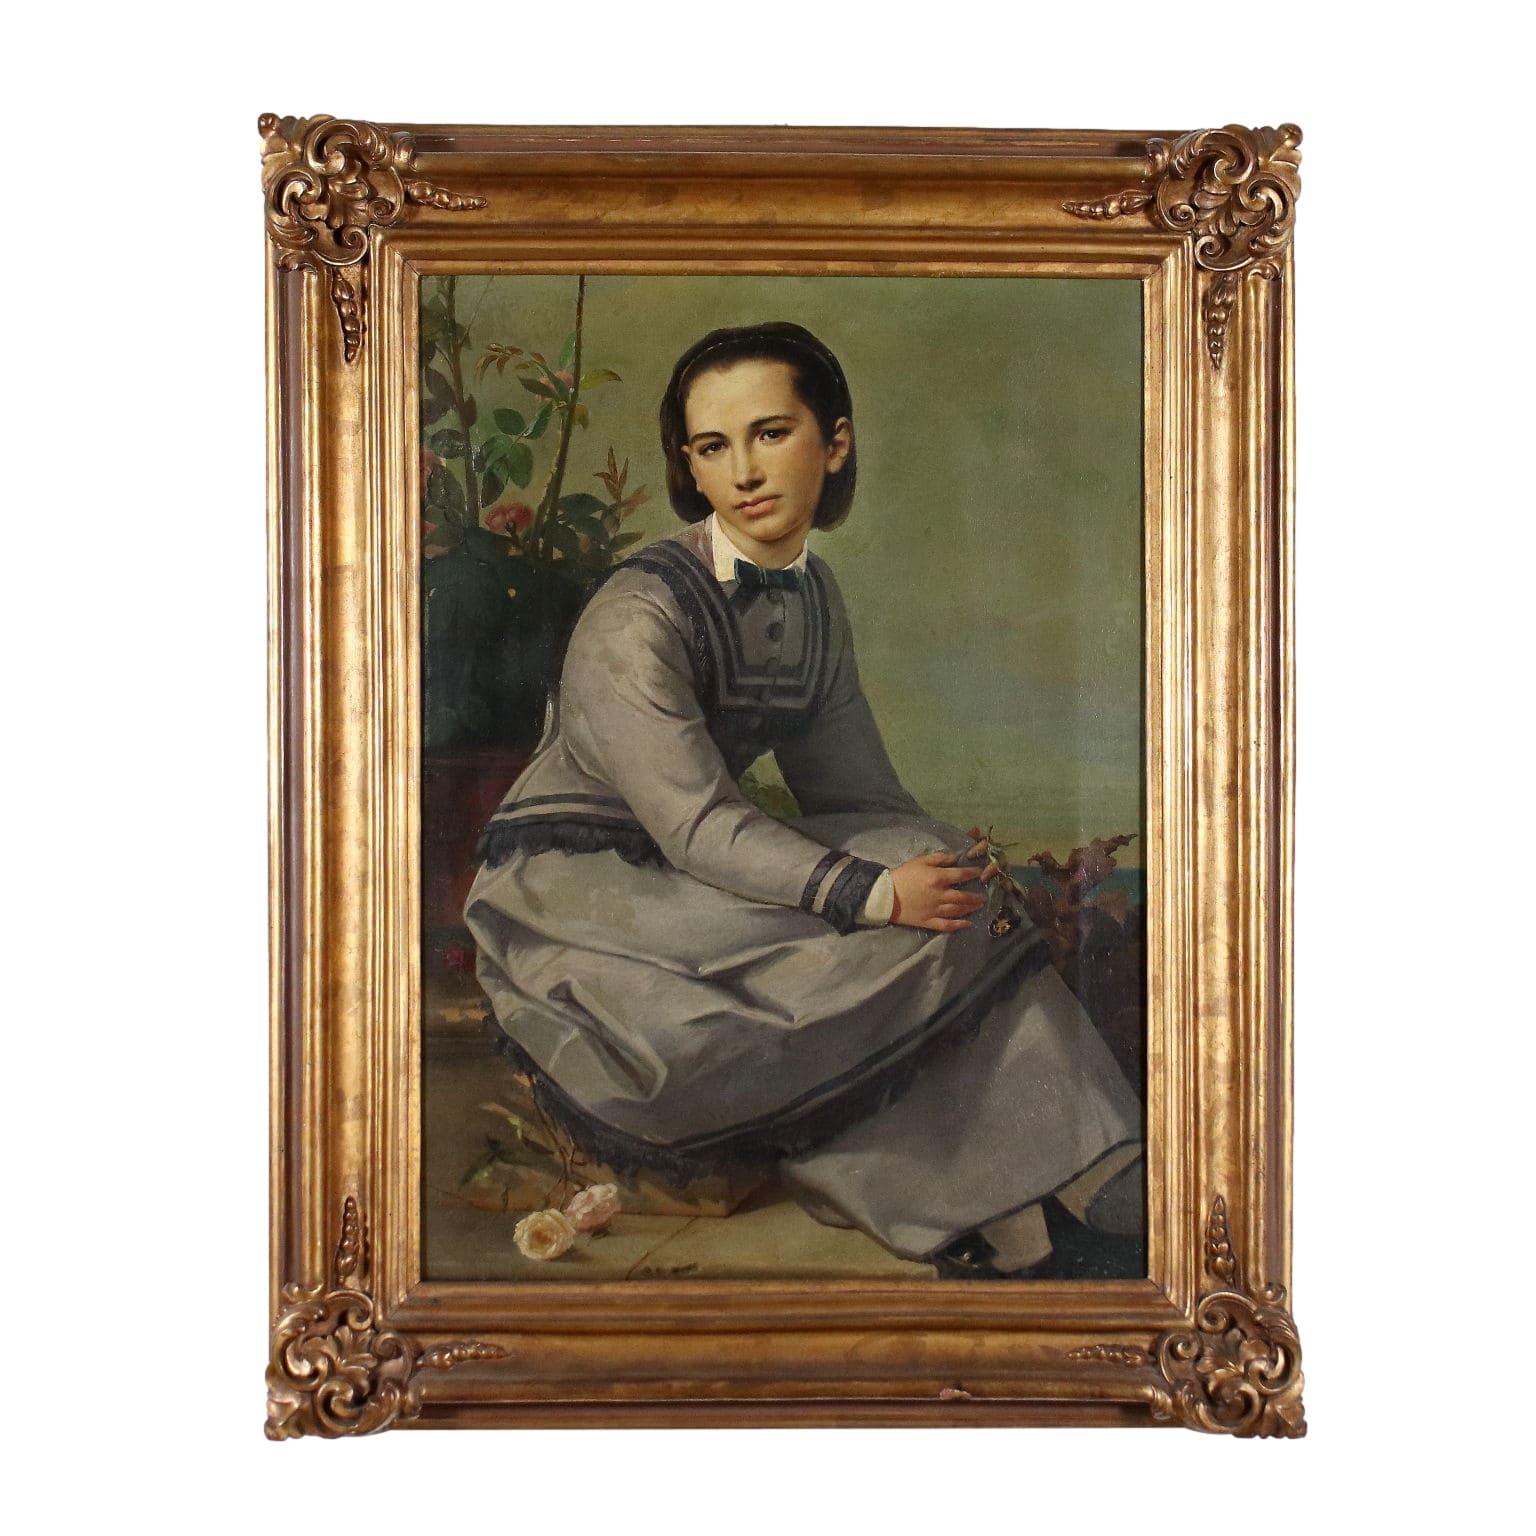 Unknown Portrait Painting - Portrait of Young Woman, XIXth century